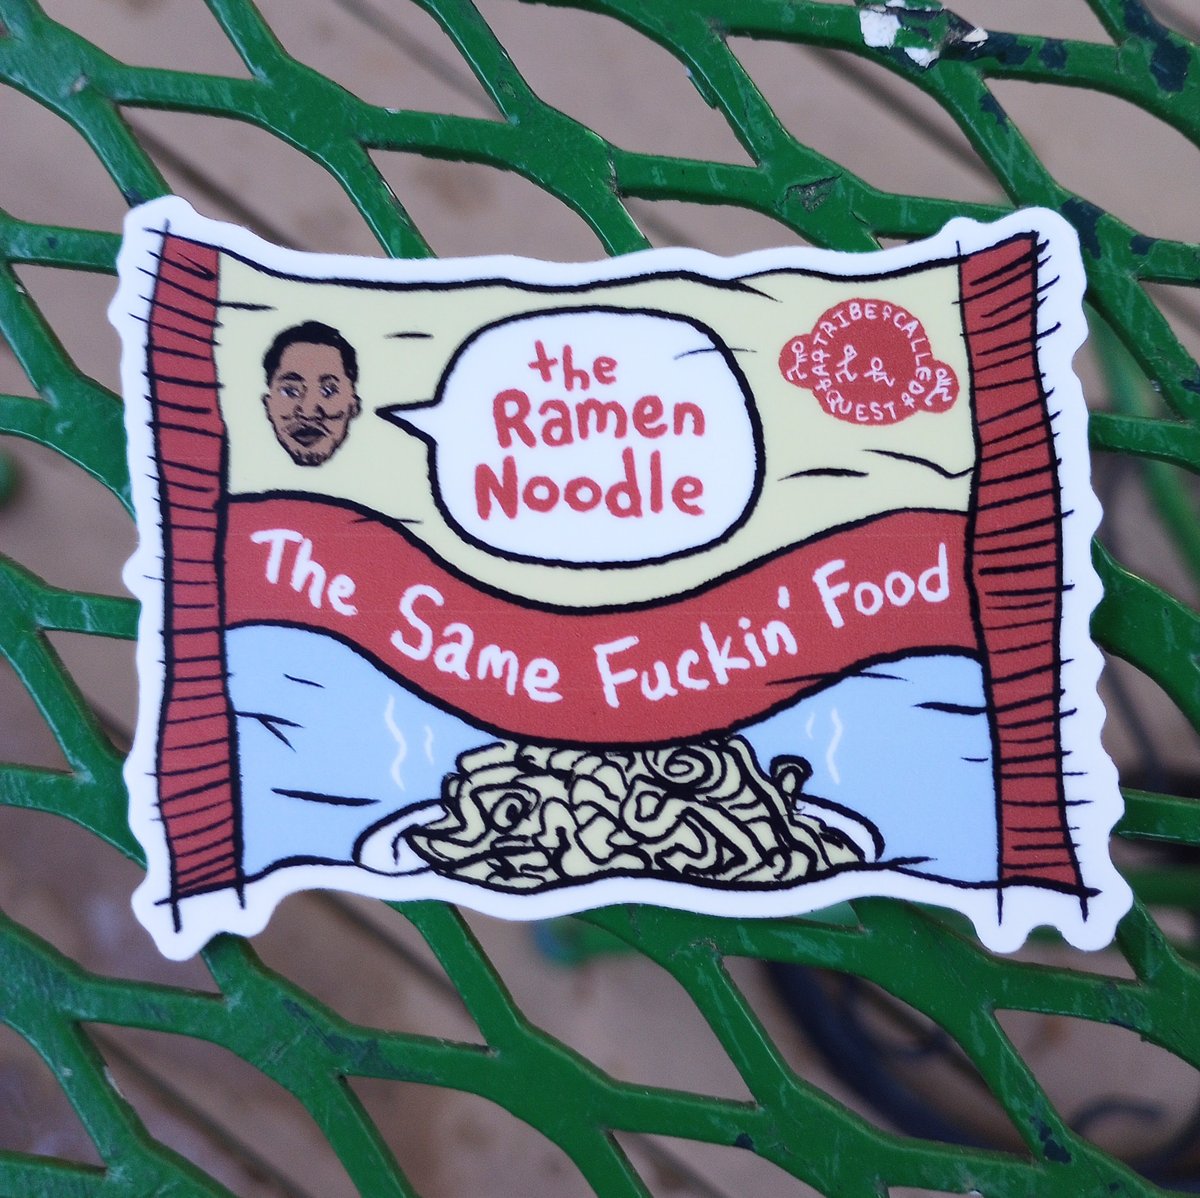 Image of The Ramen Noodle sticker